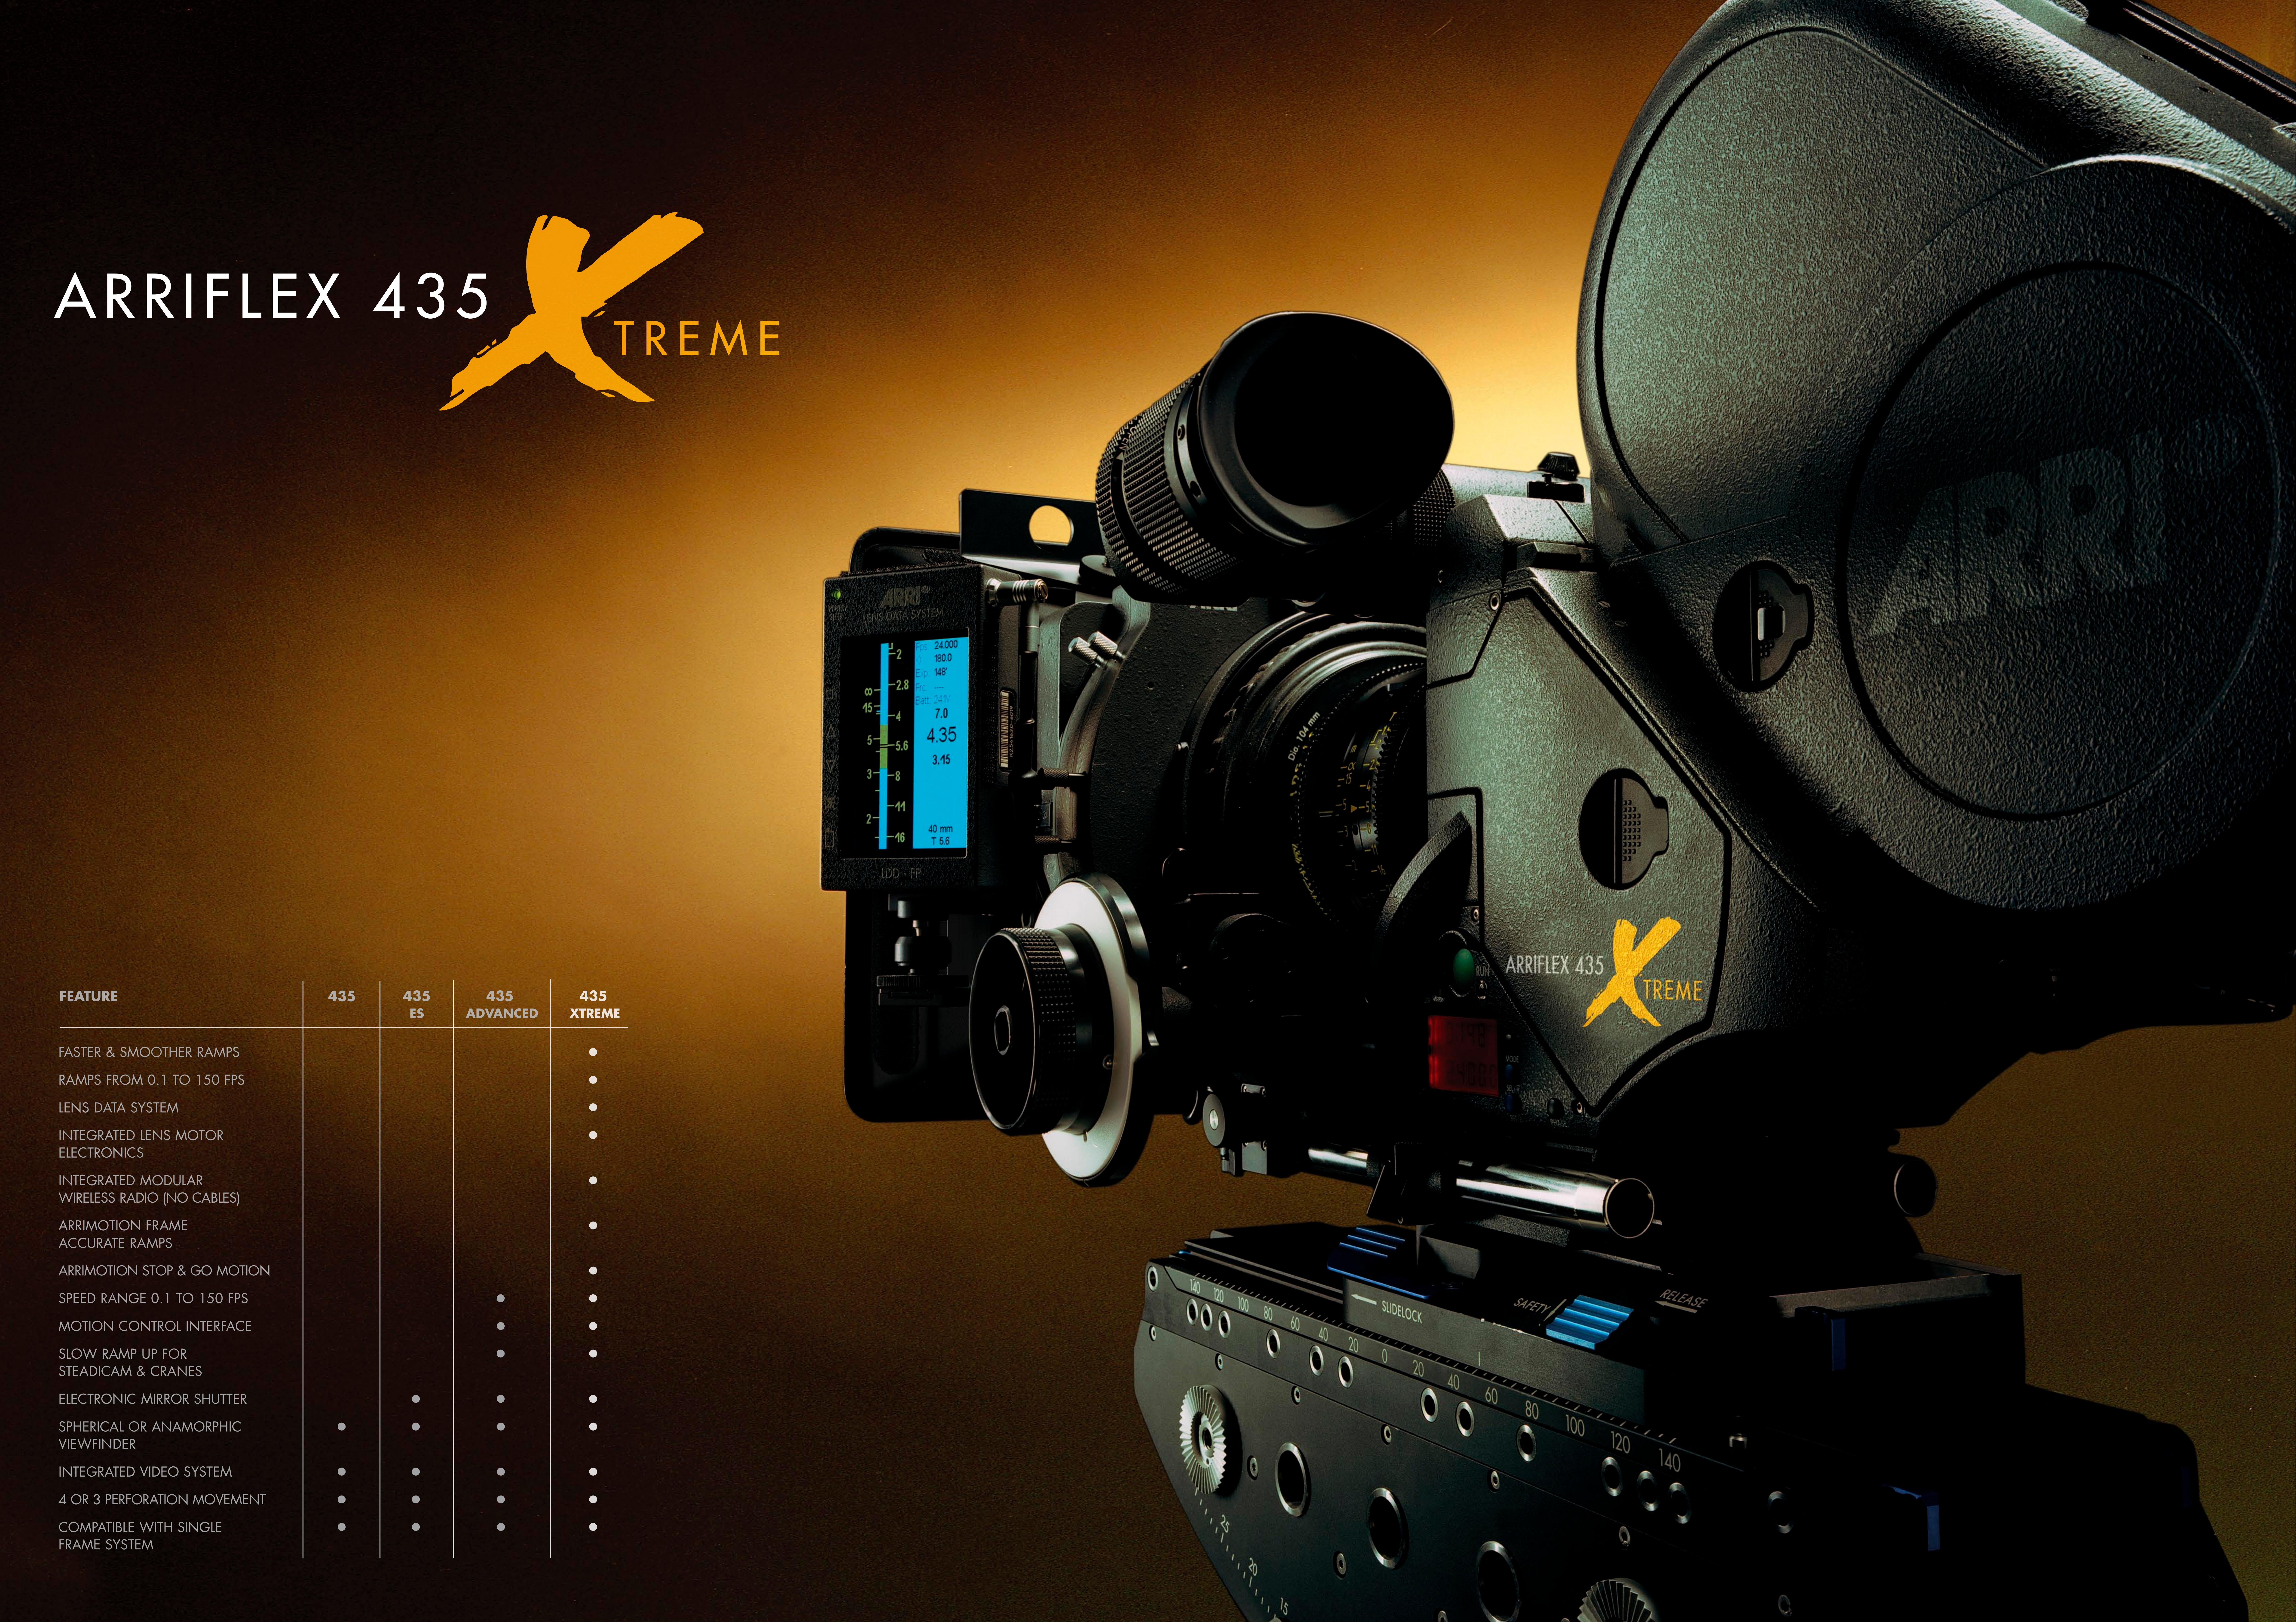 ARRI 435 XTreme Film Camera User Manual